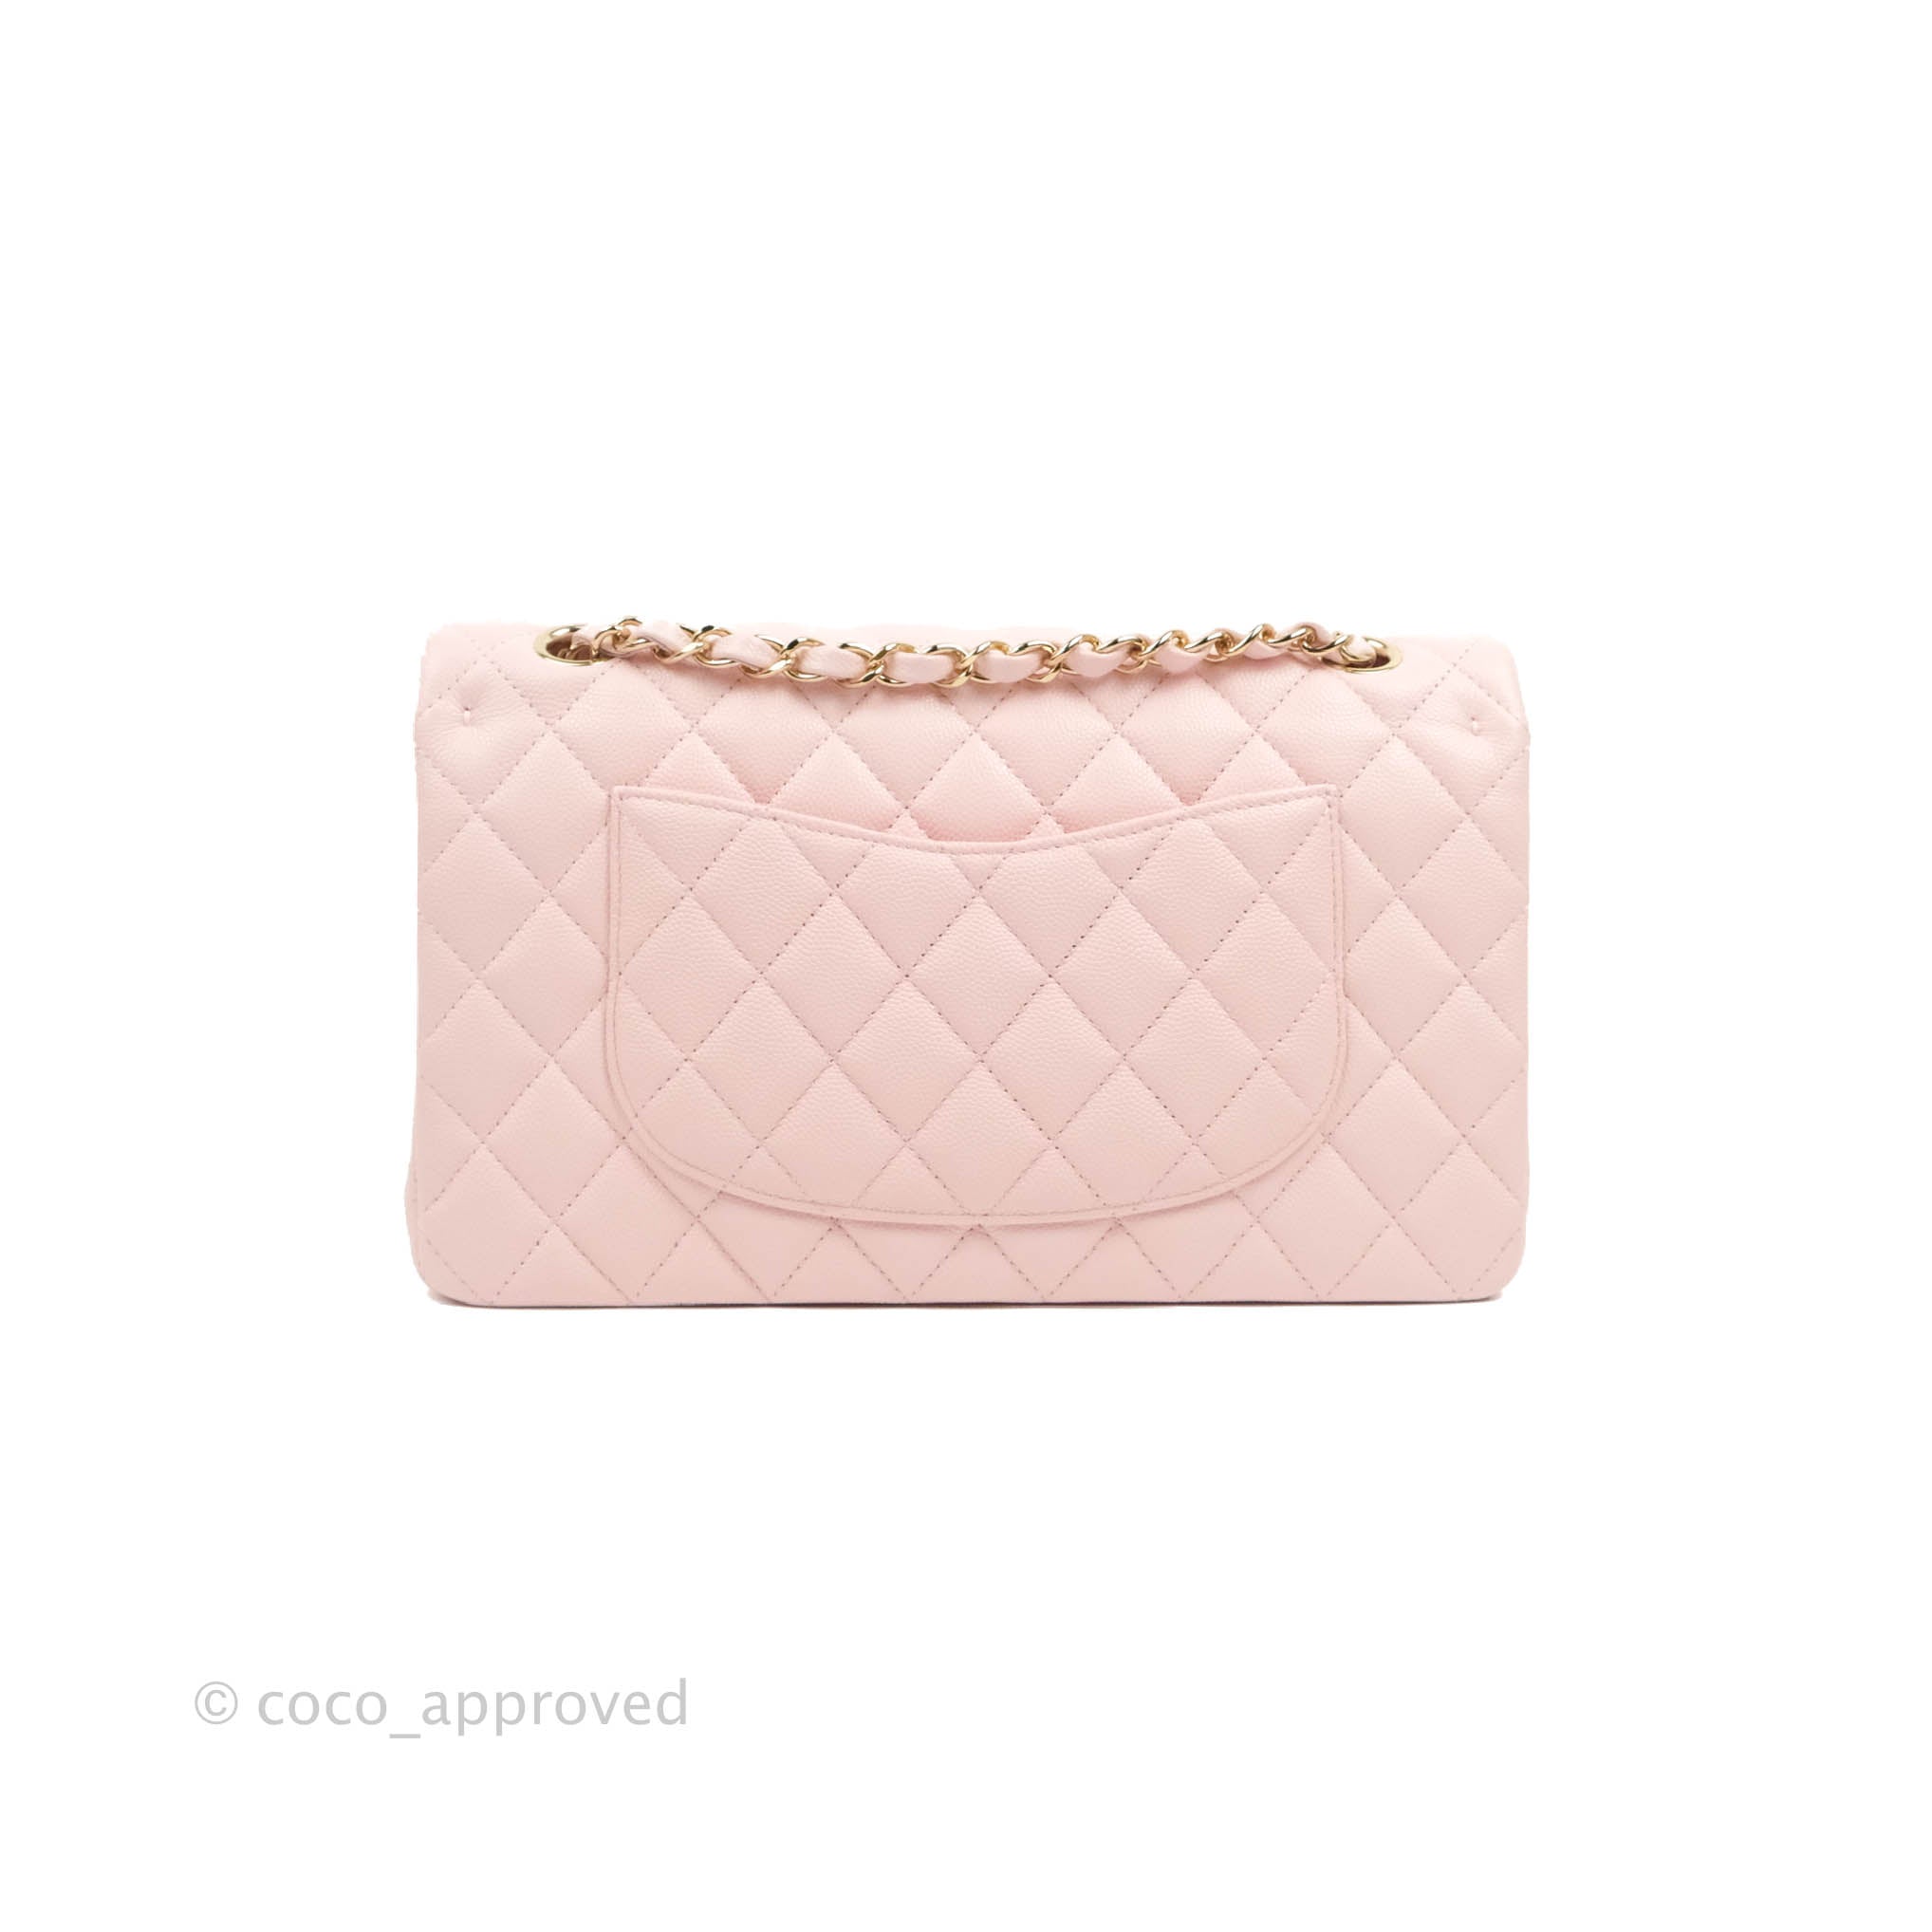 pink chanel bag new medium